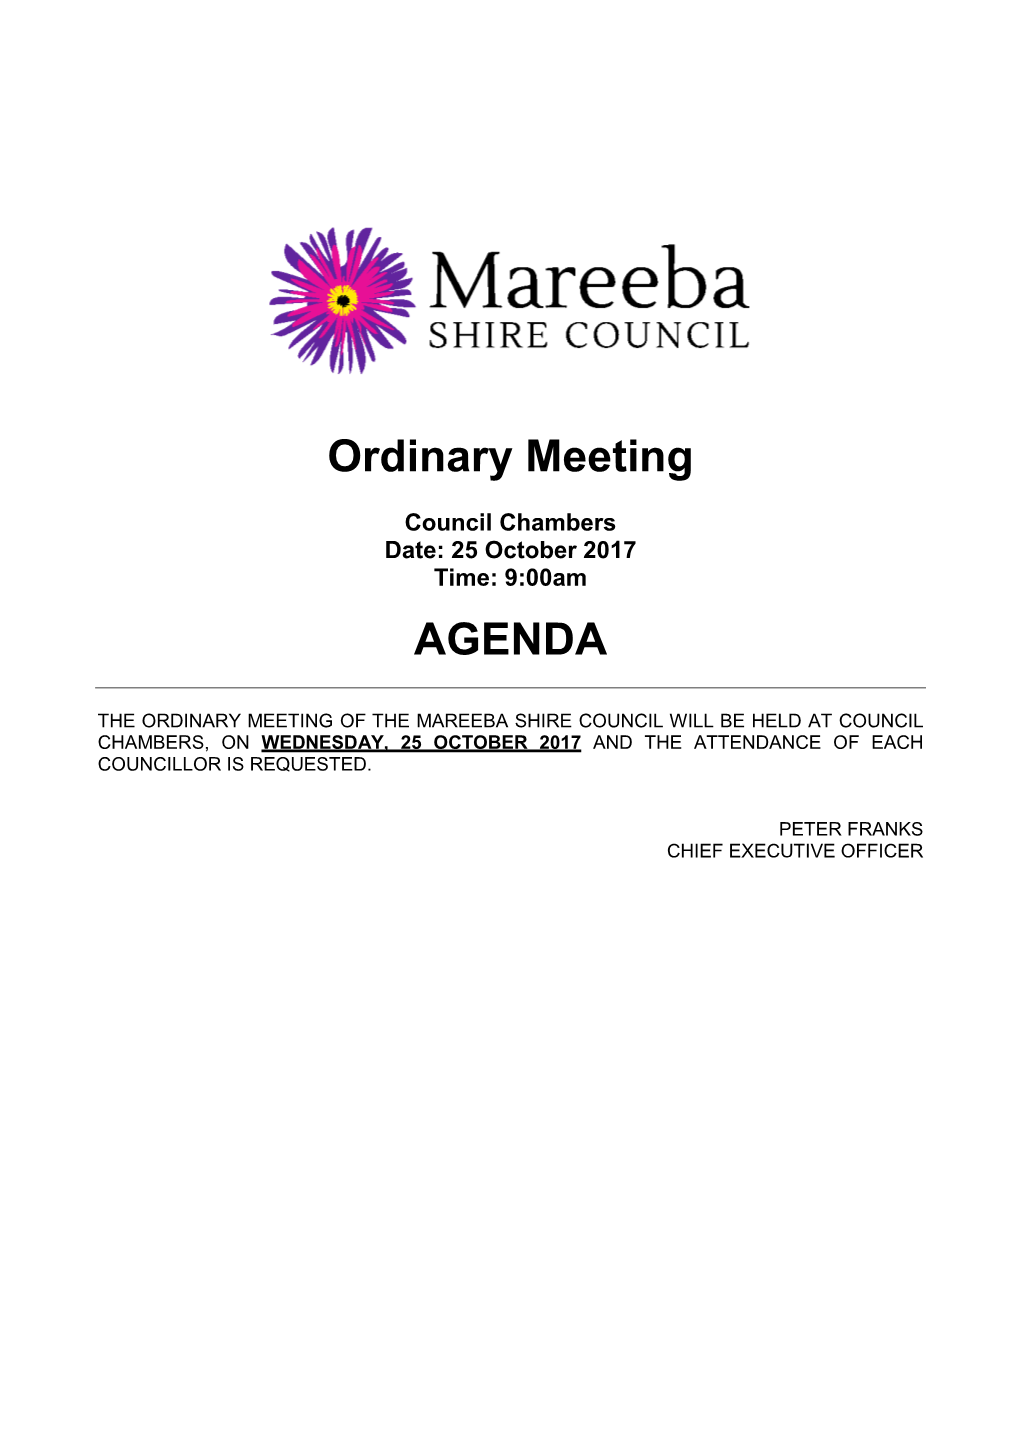 Ordinary Meeting AGENDA